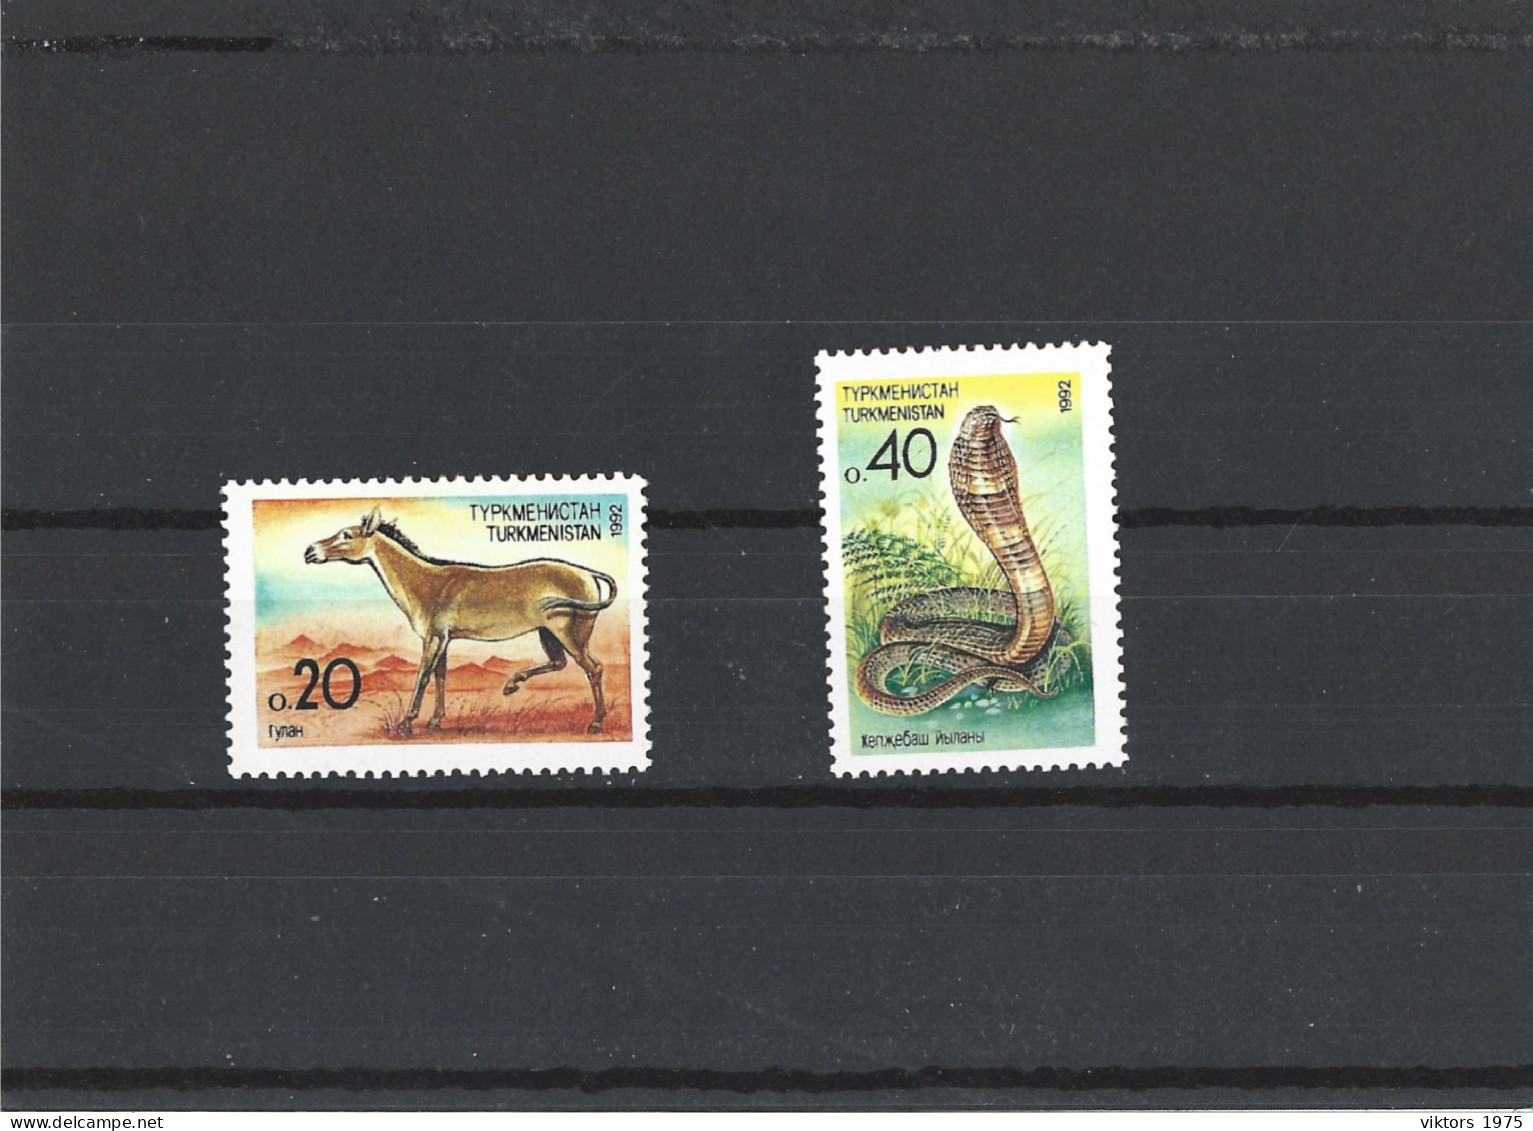 MNH Stamps Nr.2-3 In MICHEL Catalog - Turkmenistan